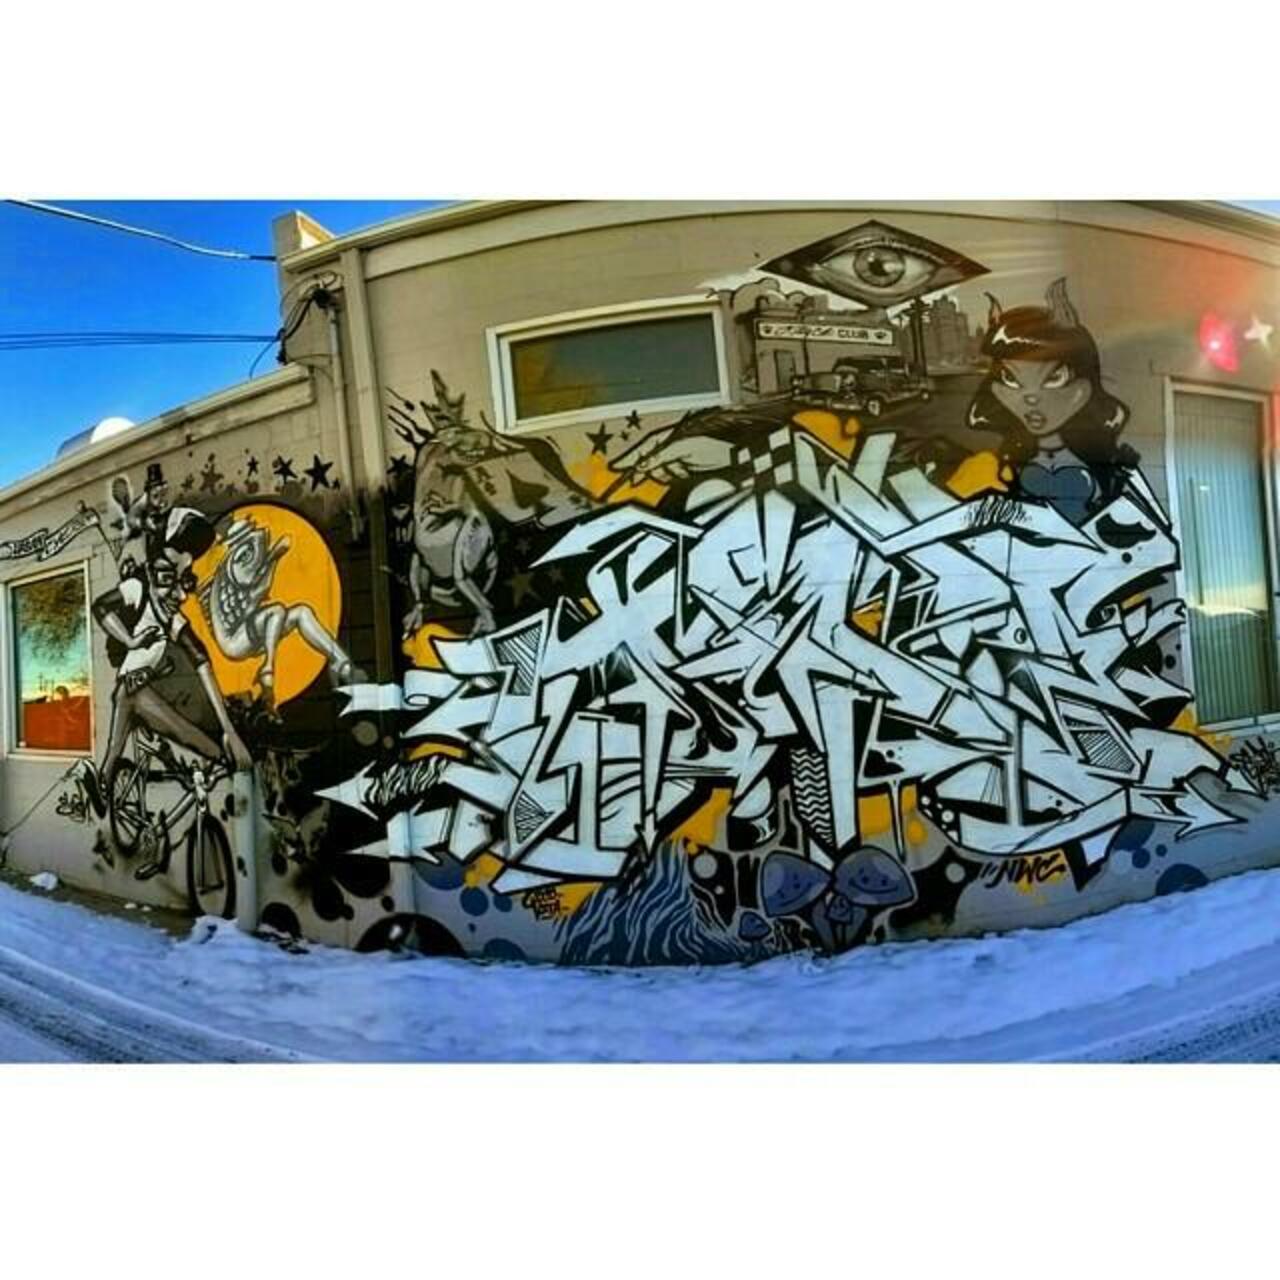 #graffpics #graffiti #art #guerillagarden #graffhunter #graffitifightclub #jolt #denvergraffiti #graffitiporn #graf… http://t.co/HTzUmzuXgy